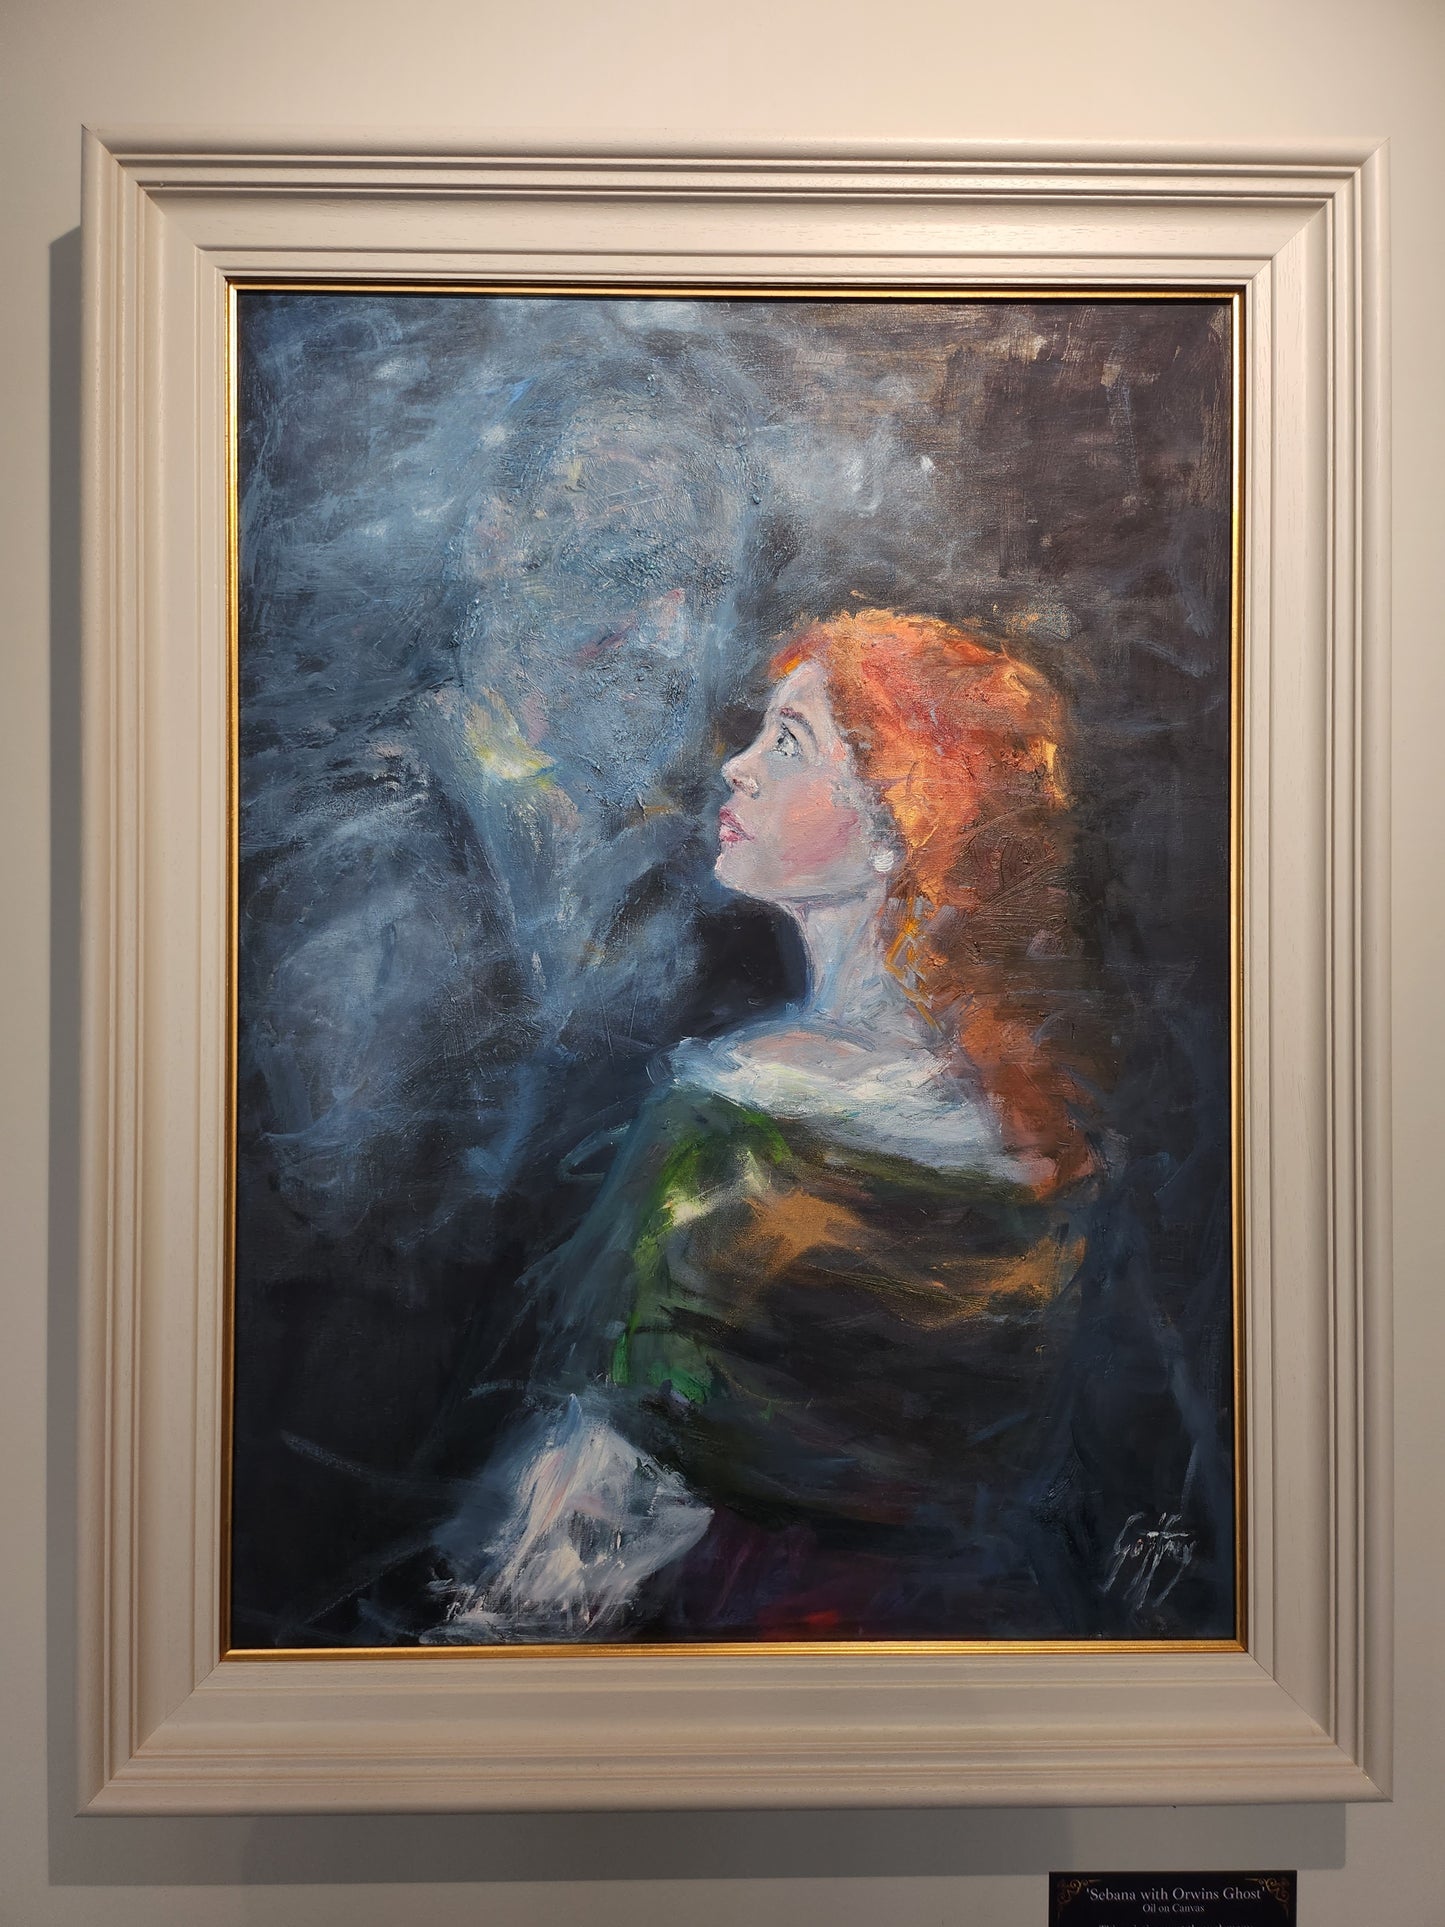 Sebana with Orwin's Ghost- Original Oil on Canvas